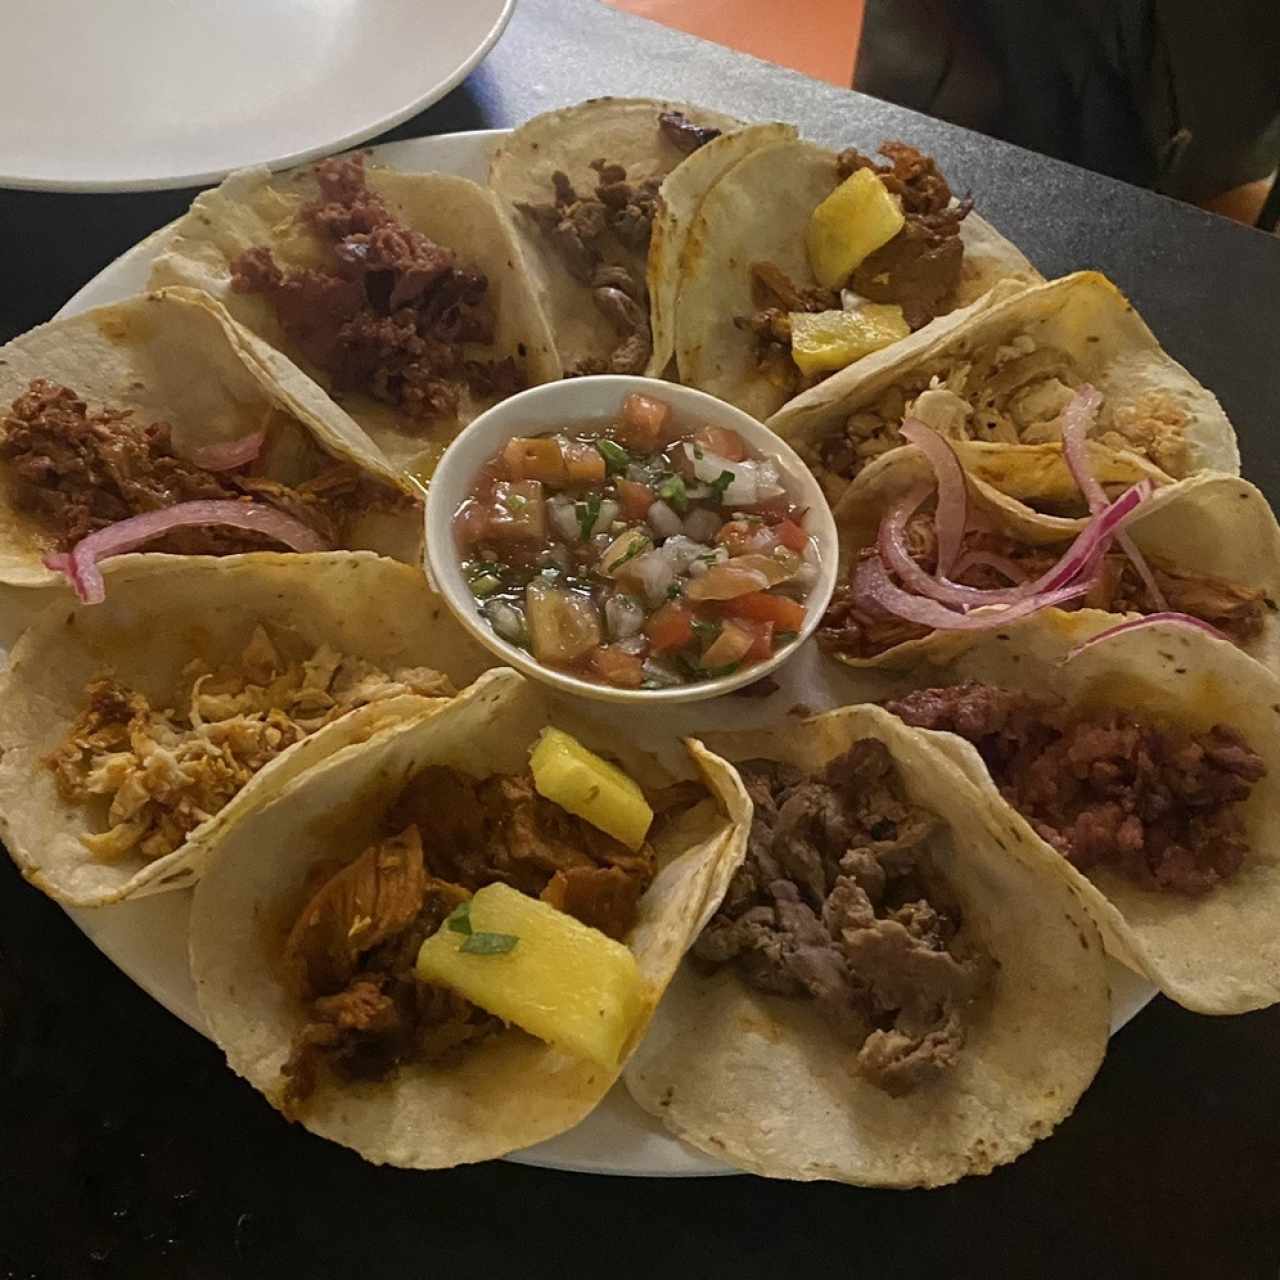 Tacos Fiesta